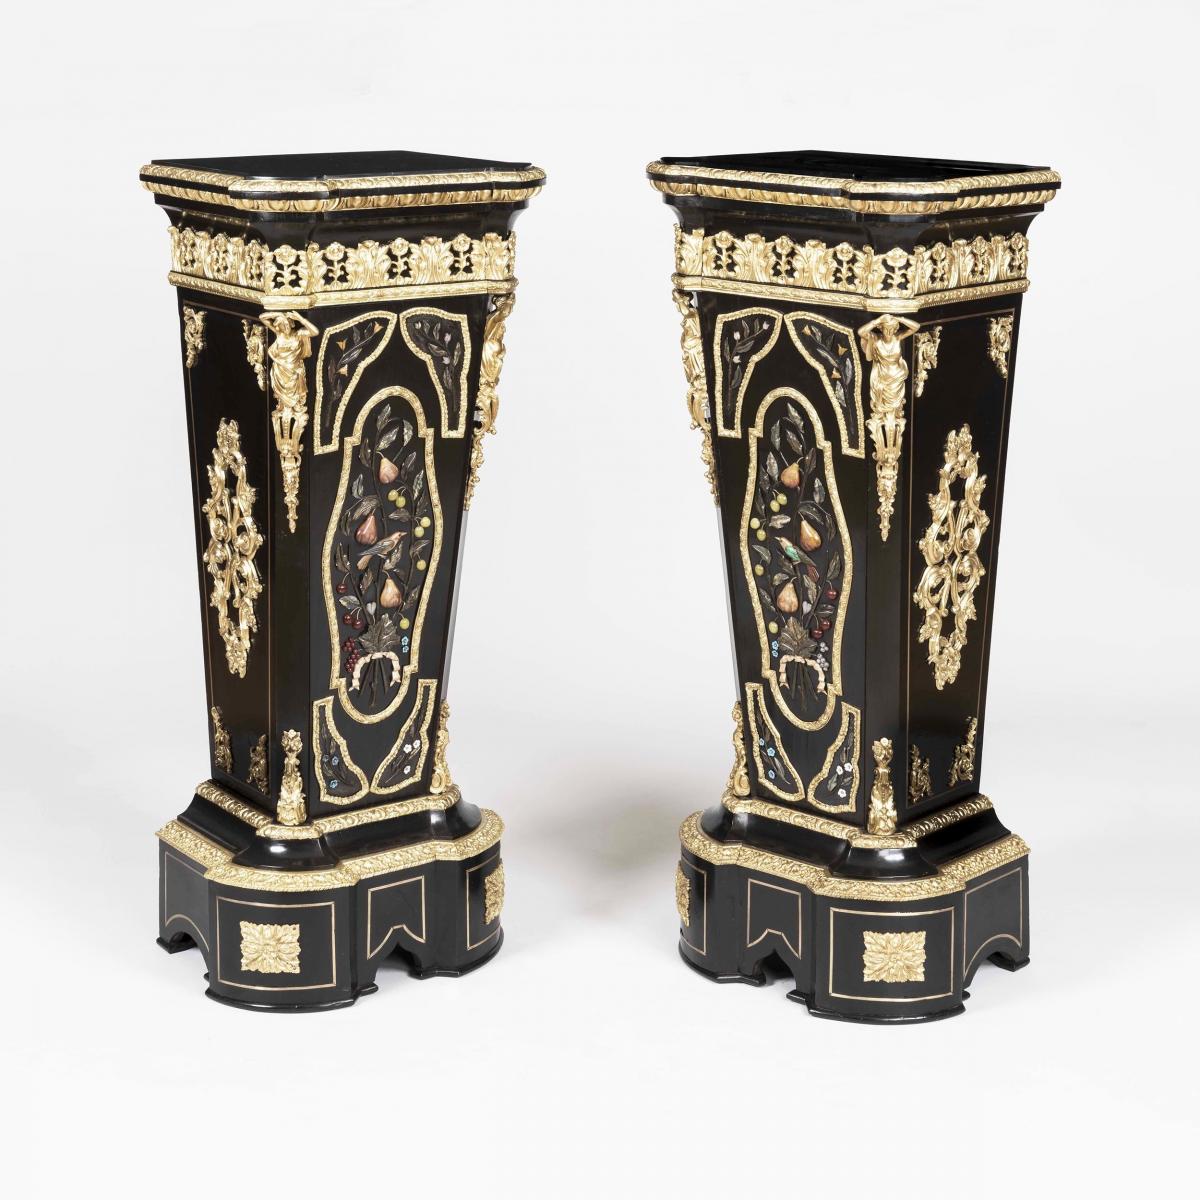 Pedestals in the manner of Befort Fils of Paris